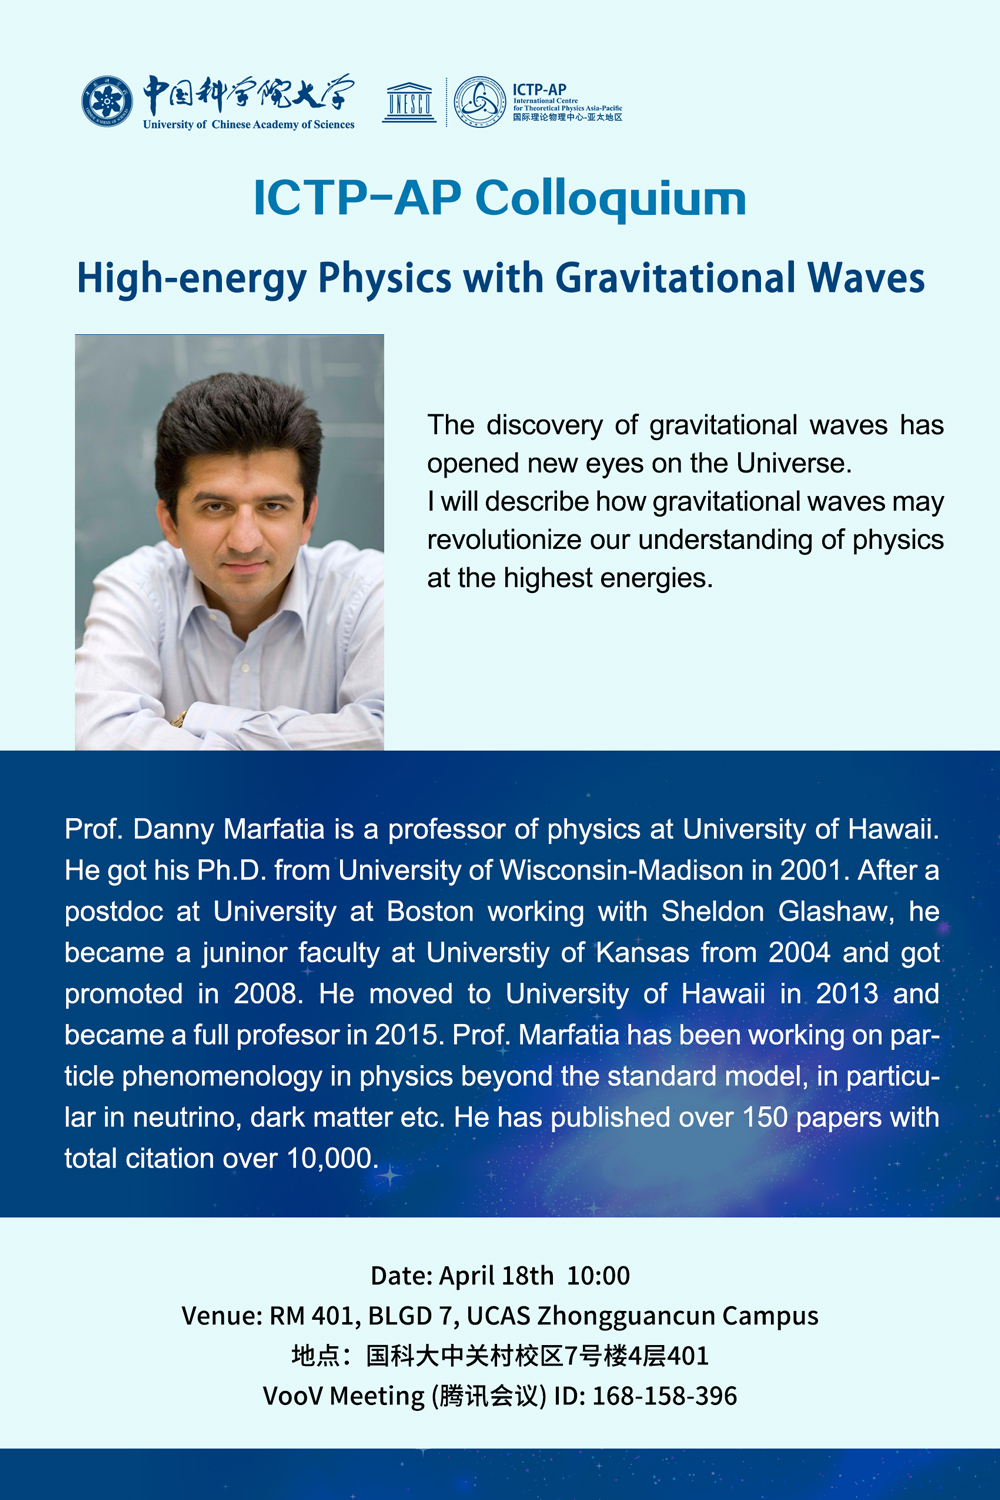 ICTP-AP Seminar:  High-energy Physics with Gravitational Waves